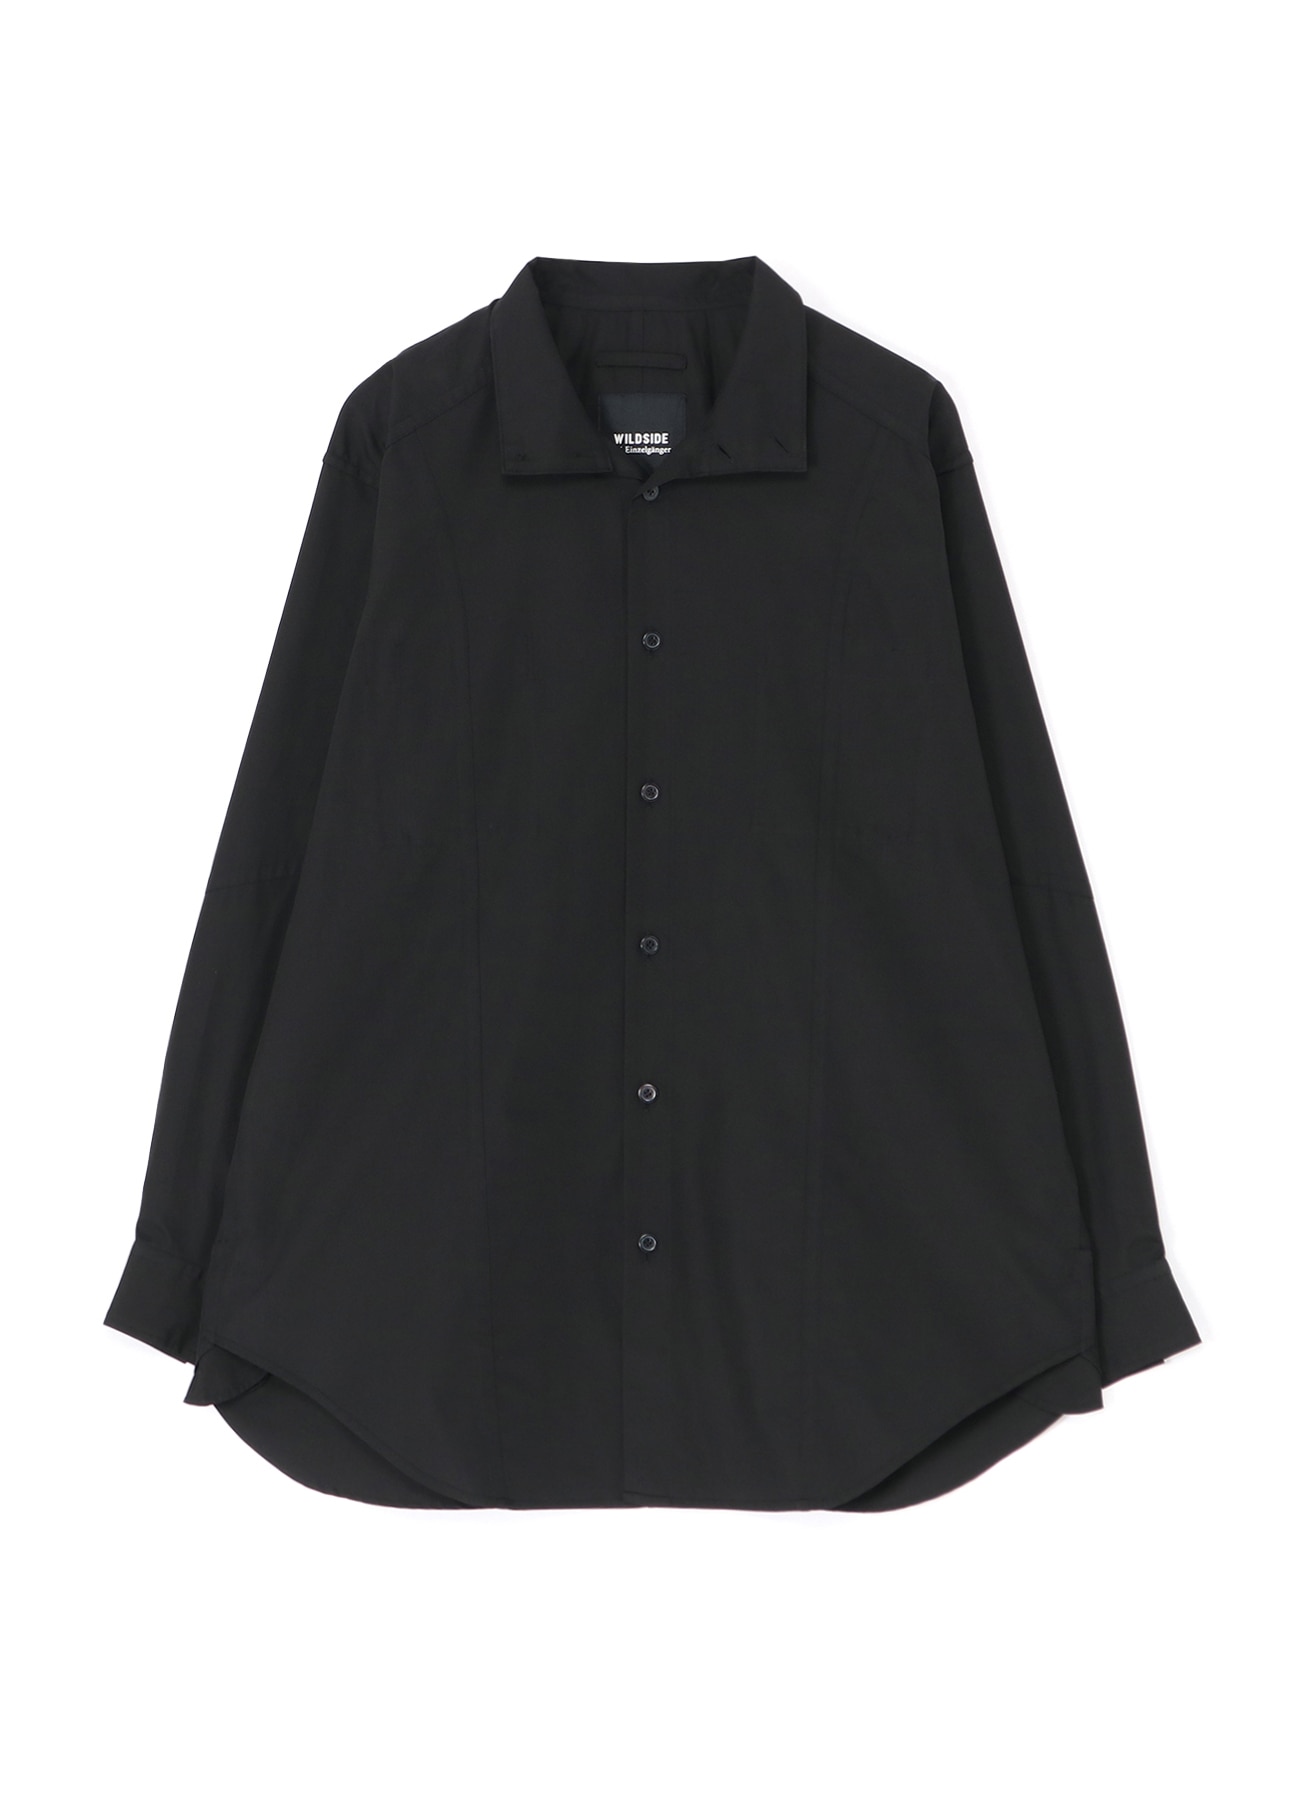 WILDSIDE × Kié Einzelgänger Cotton Broadcloth Shirt